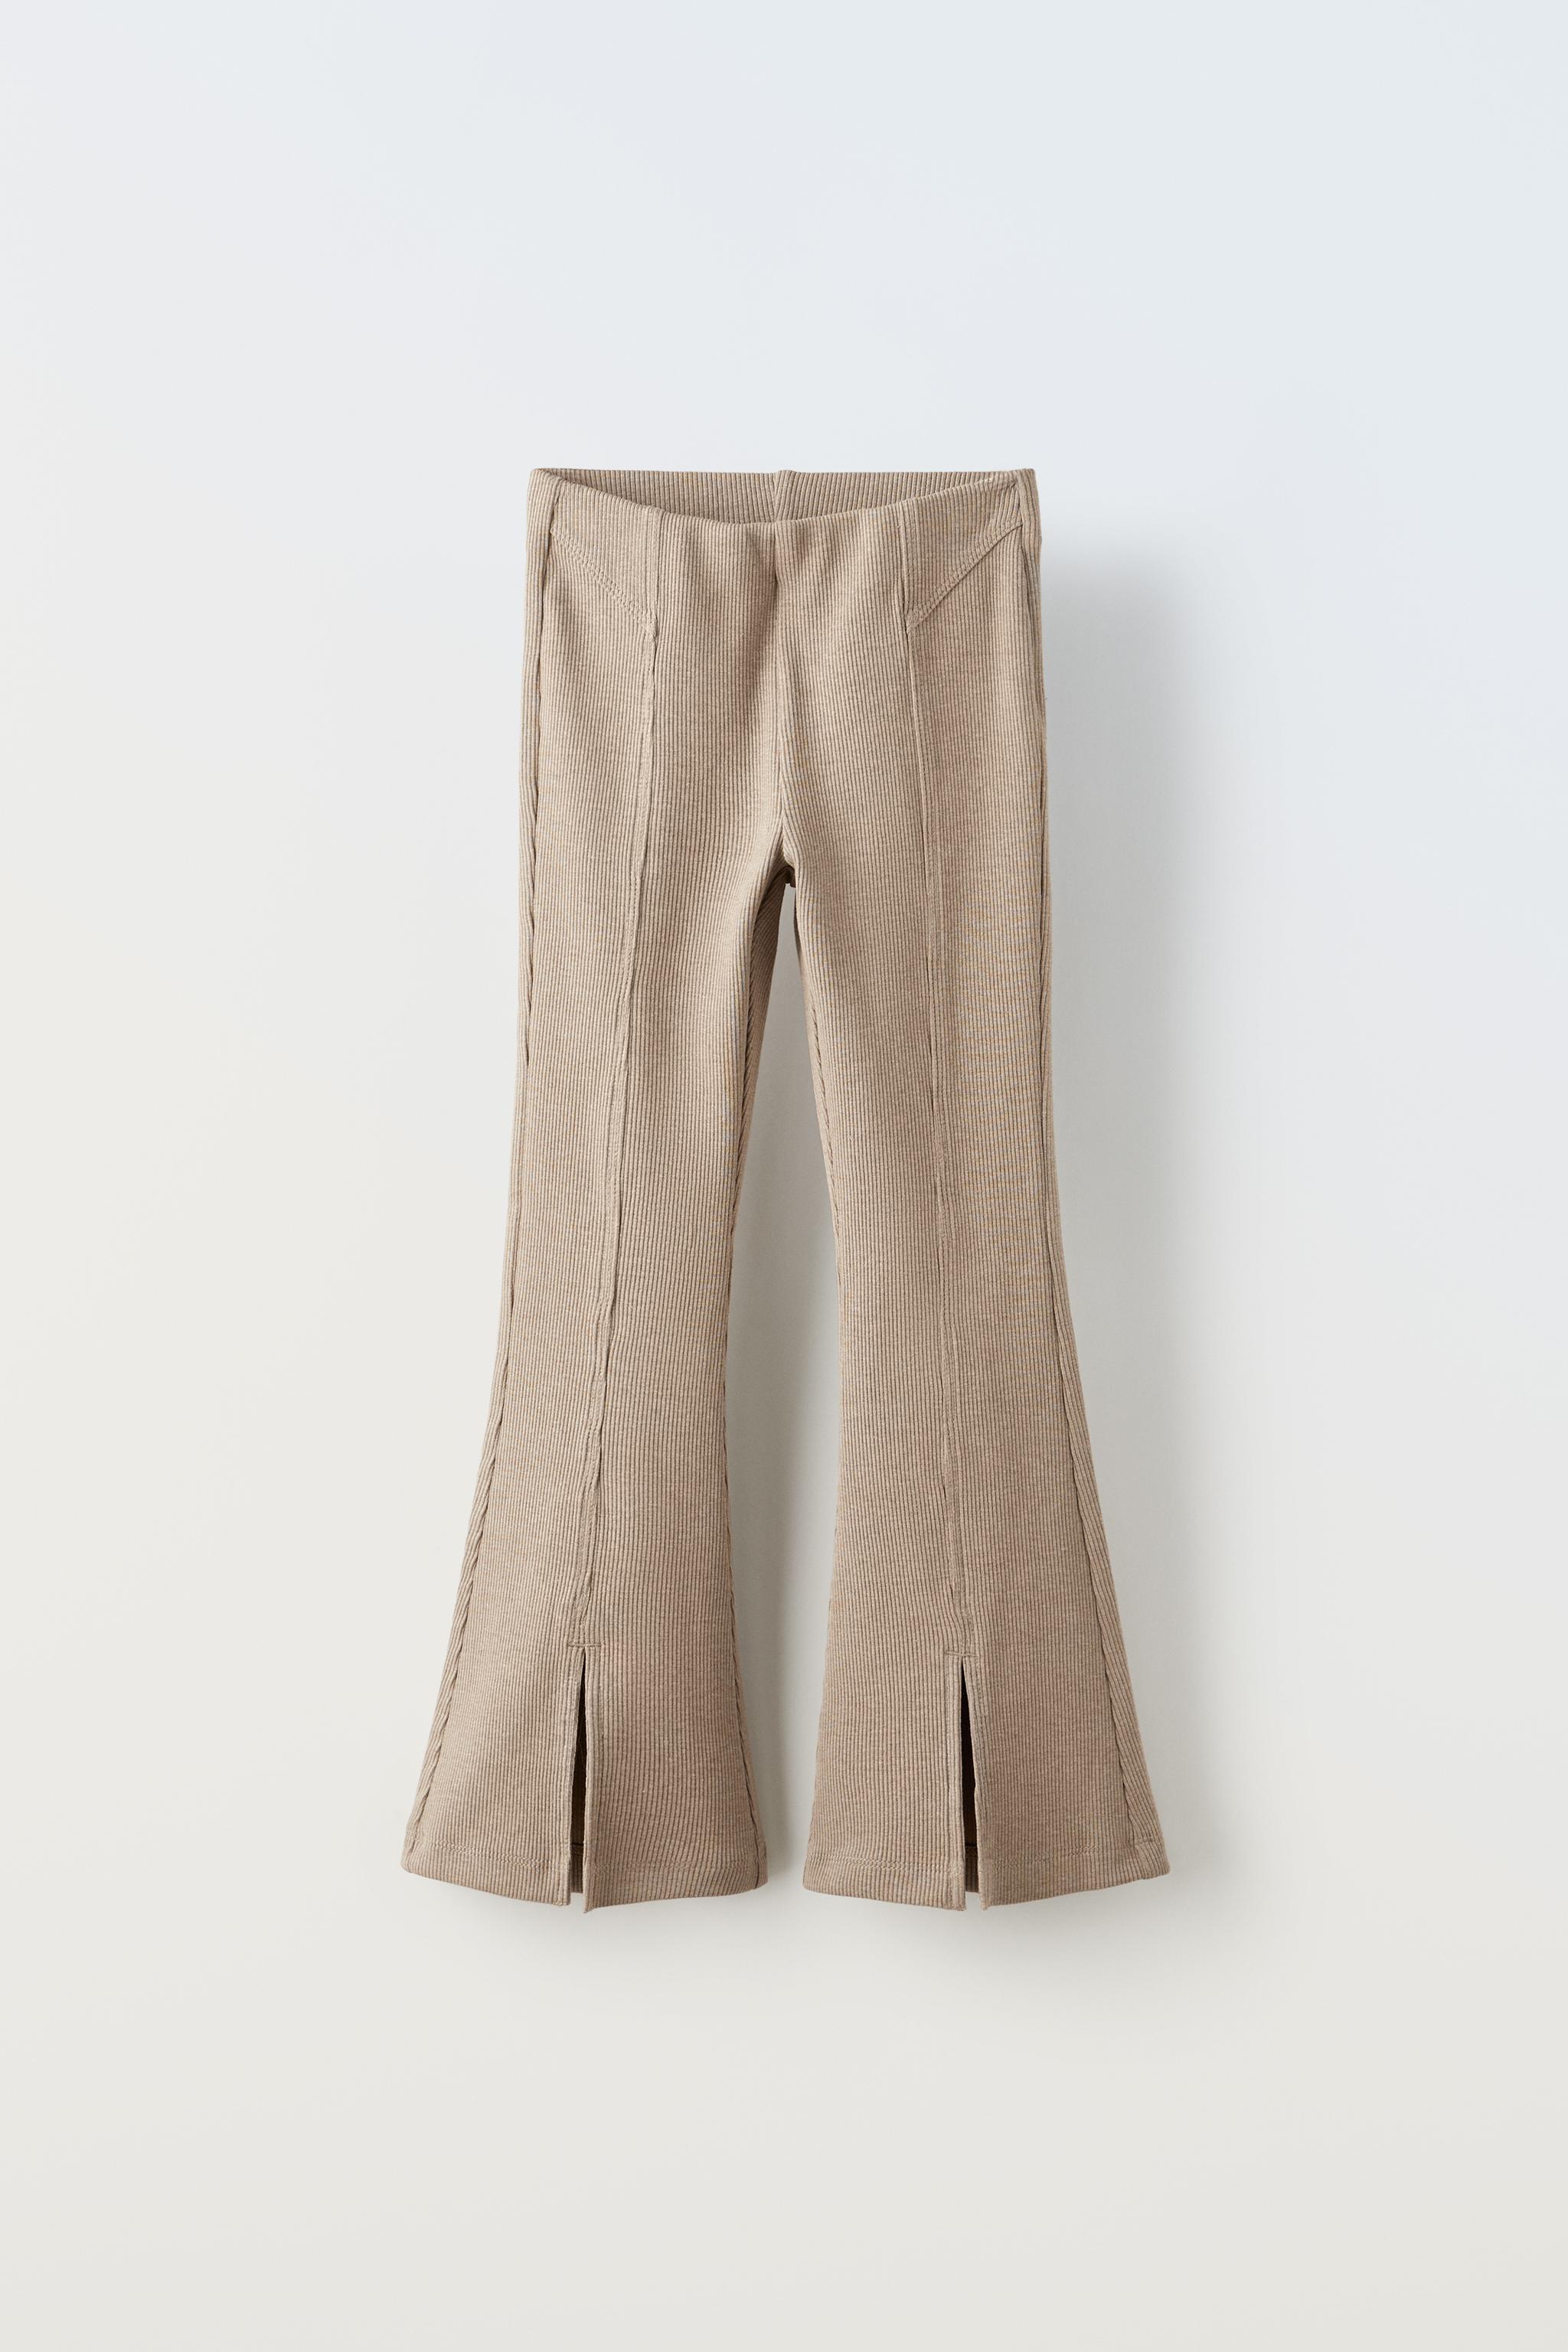 Zara Slit Ribbed Leggings / dress pants XS. Taupe